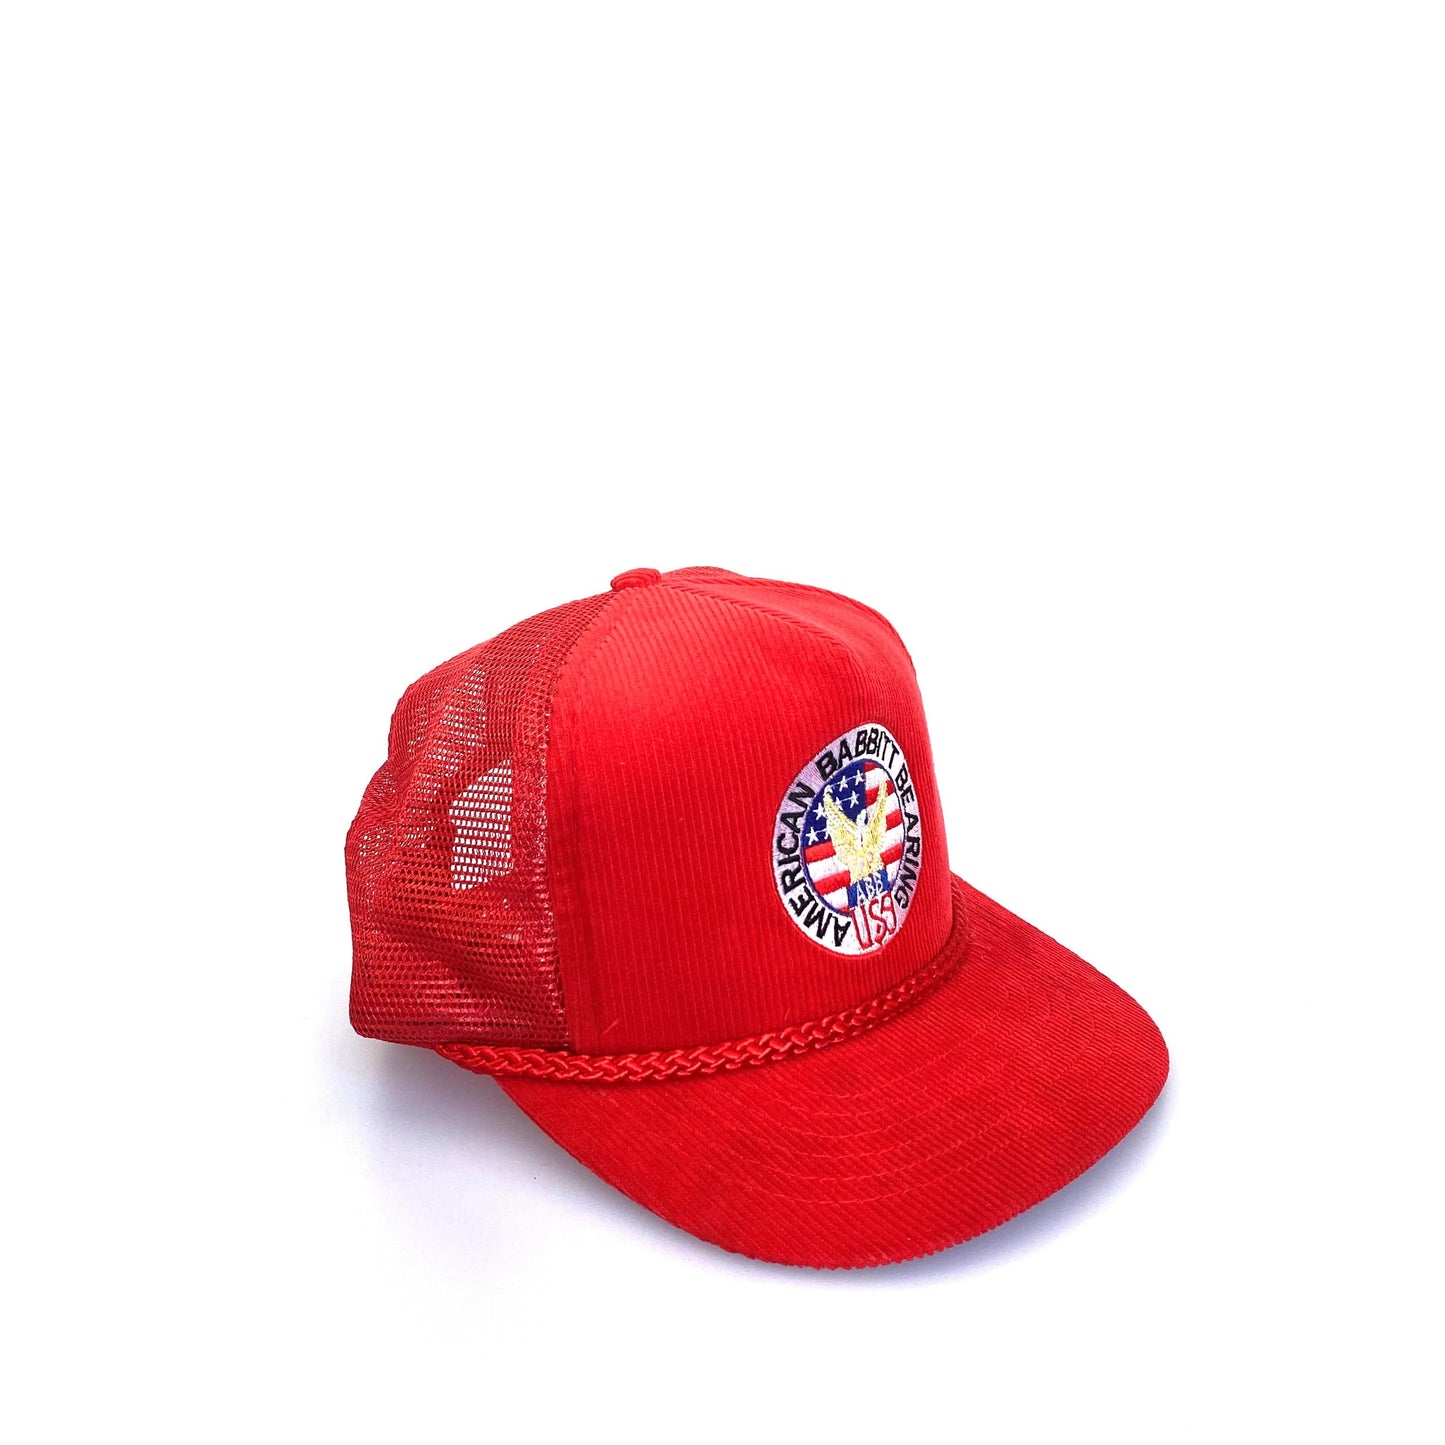 Vintage “American Babbitt Bearing” Red Corduroy Snapback Hat Corded OSFA